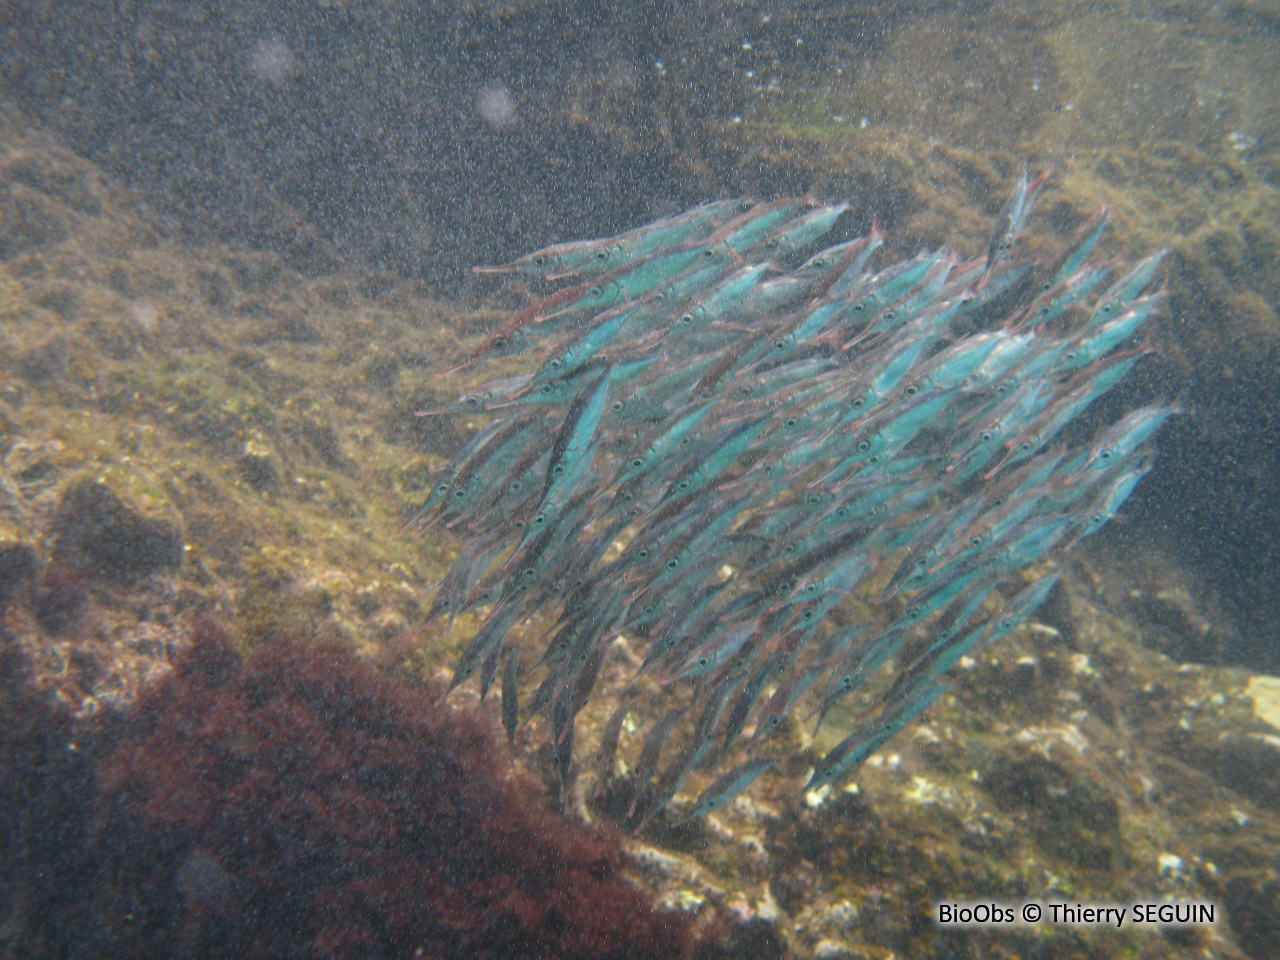 Bécasse de mer - Macroramphosus scolopax - Thierry SEGUIN - BioObs